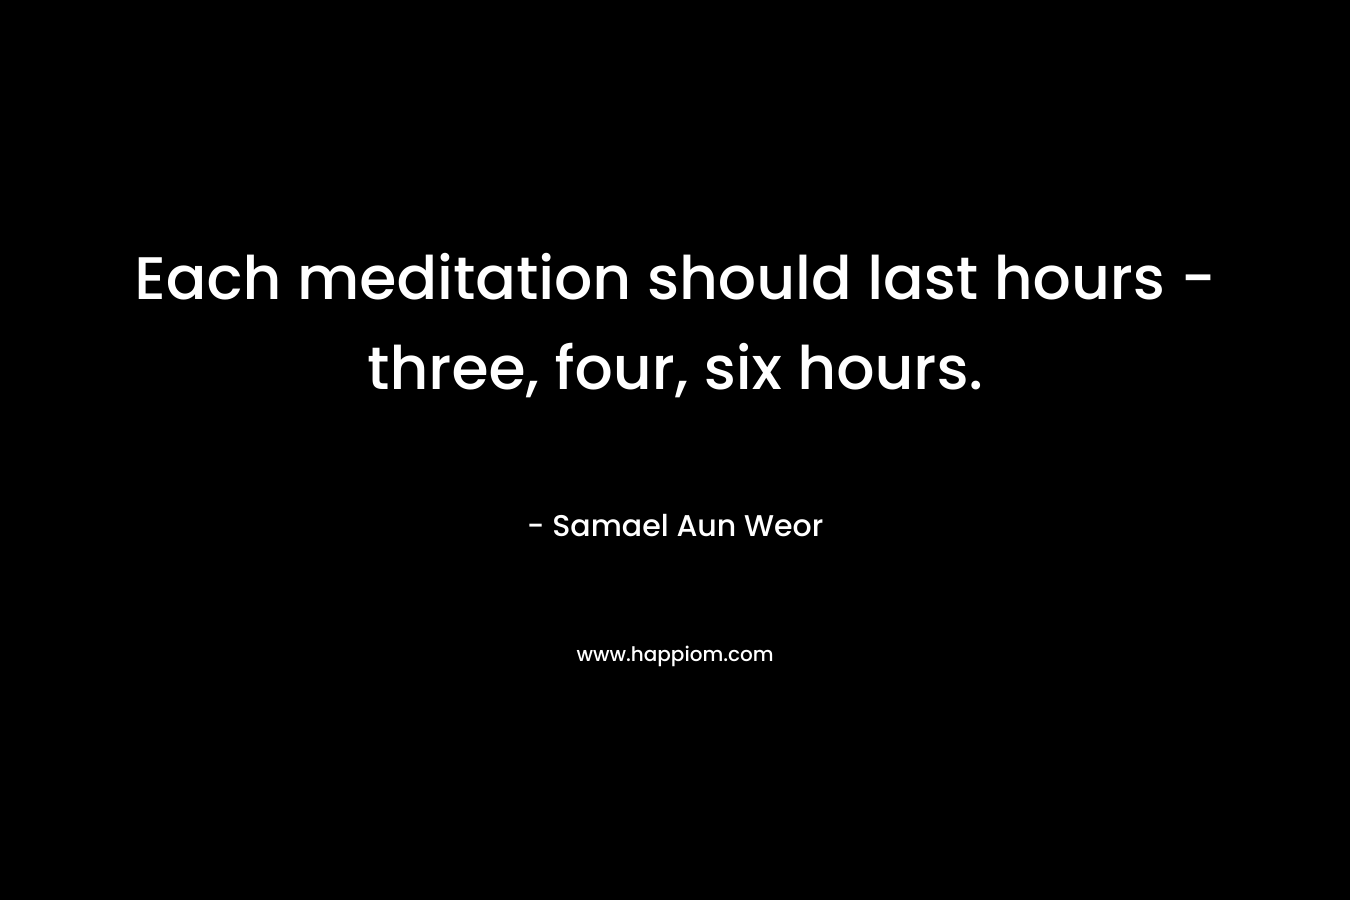 Each meditation should last hours - three, four, six hours.